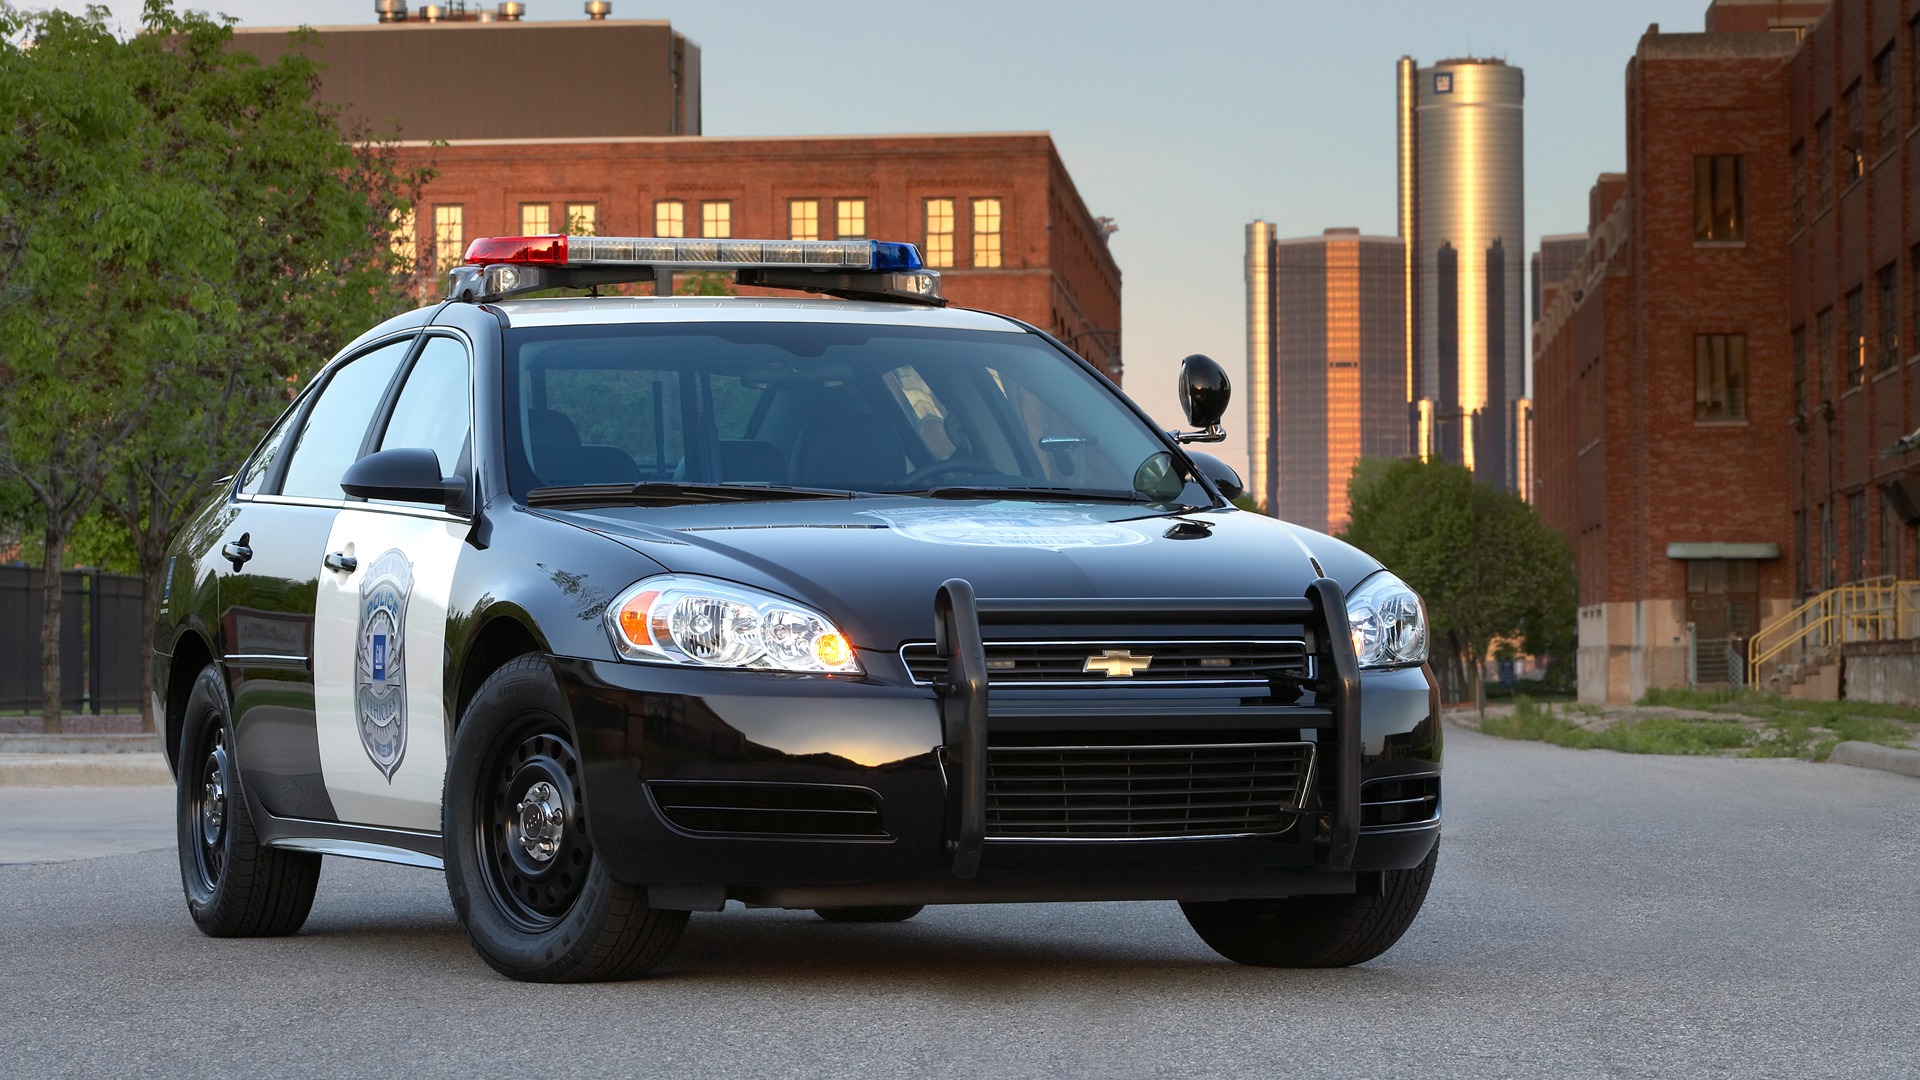 Chevrolet Impala Police Vehicle - 2011 雪佛兰3 - 1920x1080